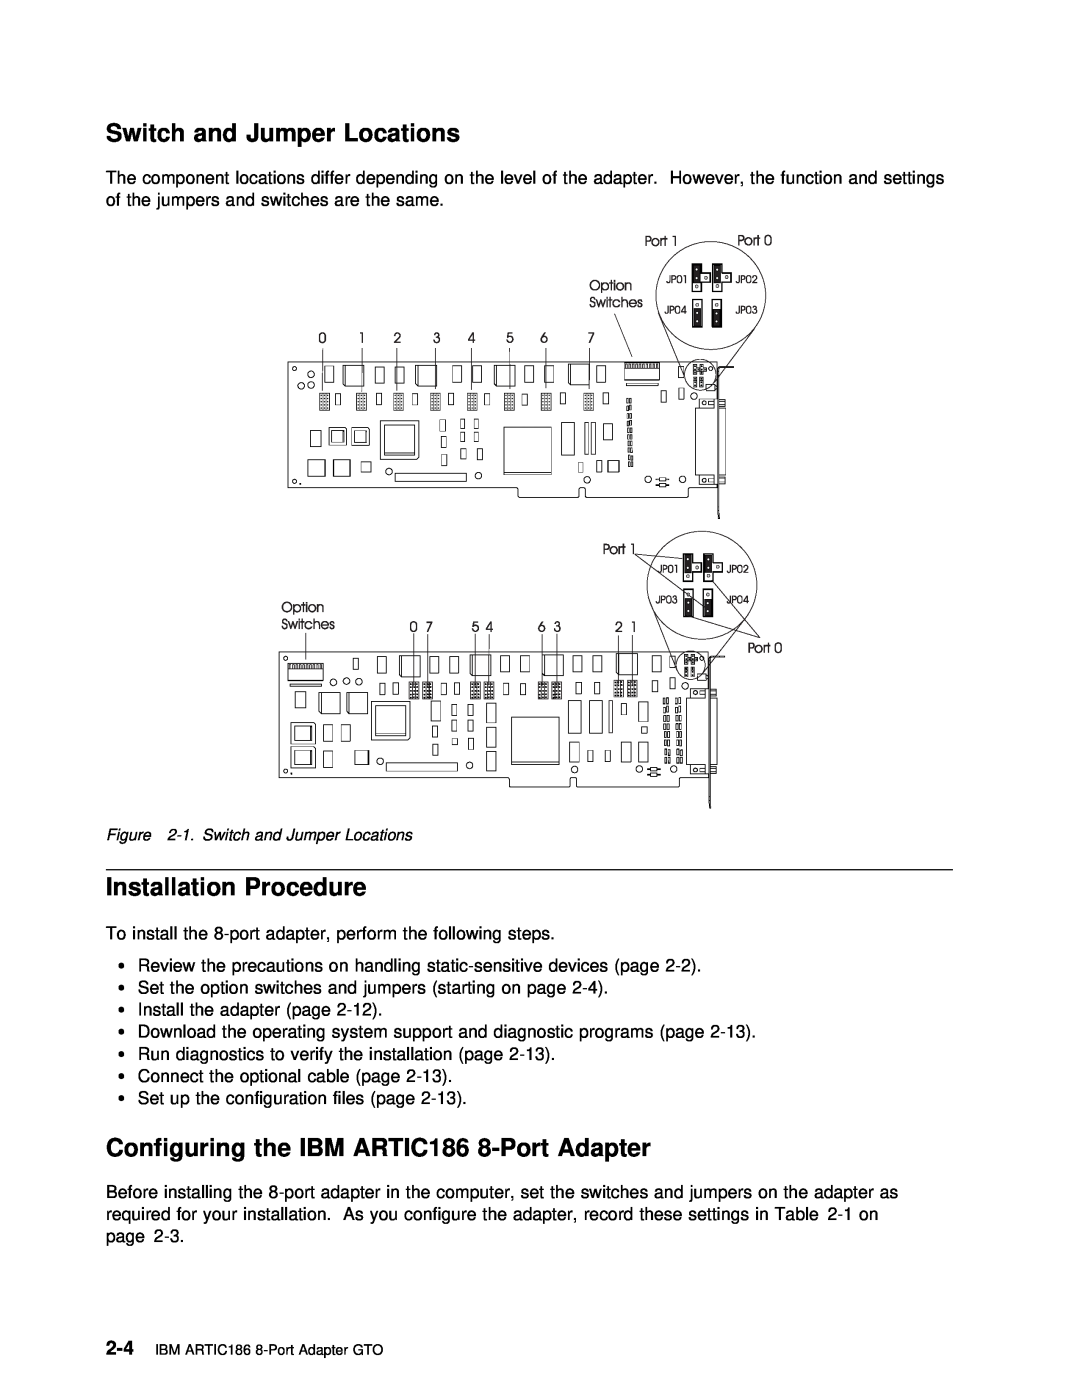 IBM manual Locations, Installation Procedure, Configuring the IBM ARTIC186 8-Port Adapter, Switch 